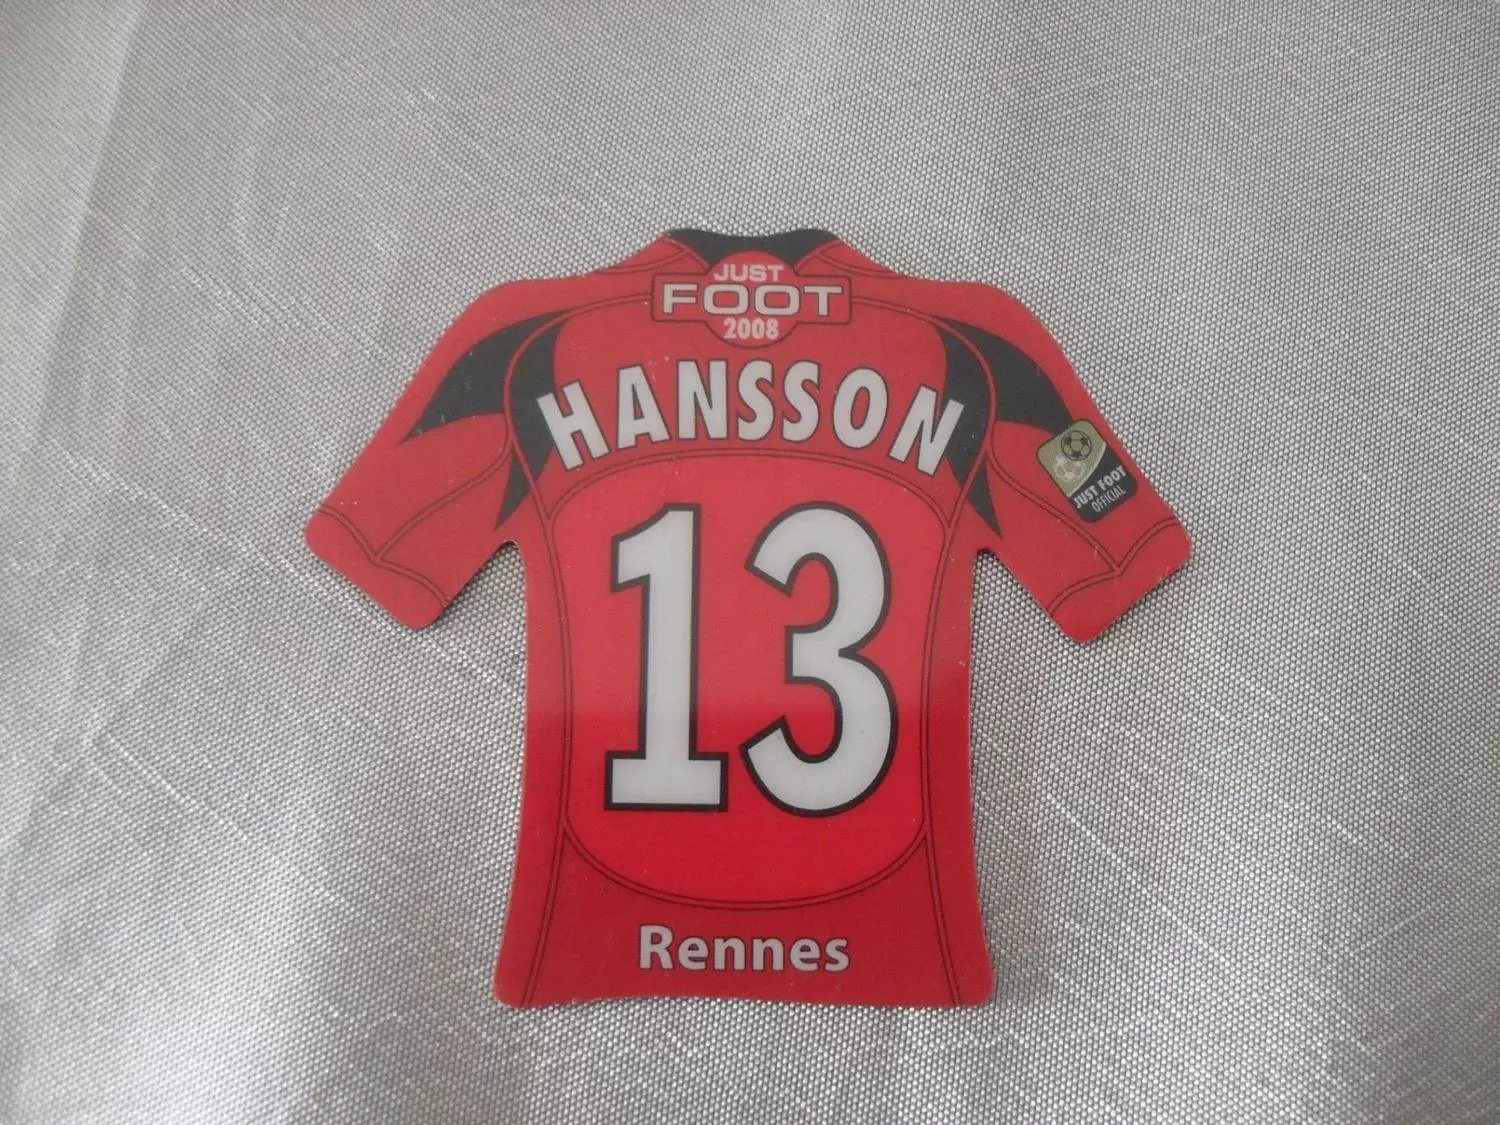 Just Foot 2008 - Rennes 13 - Hansson